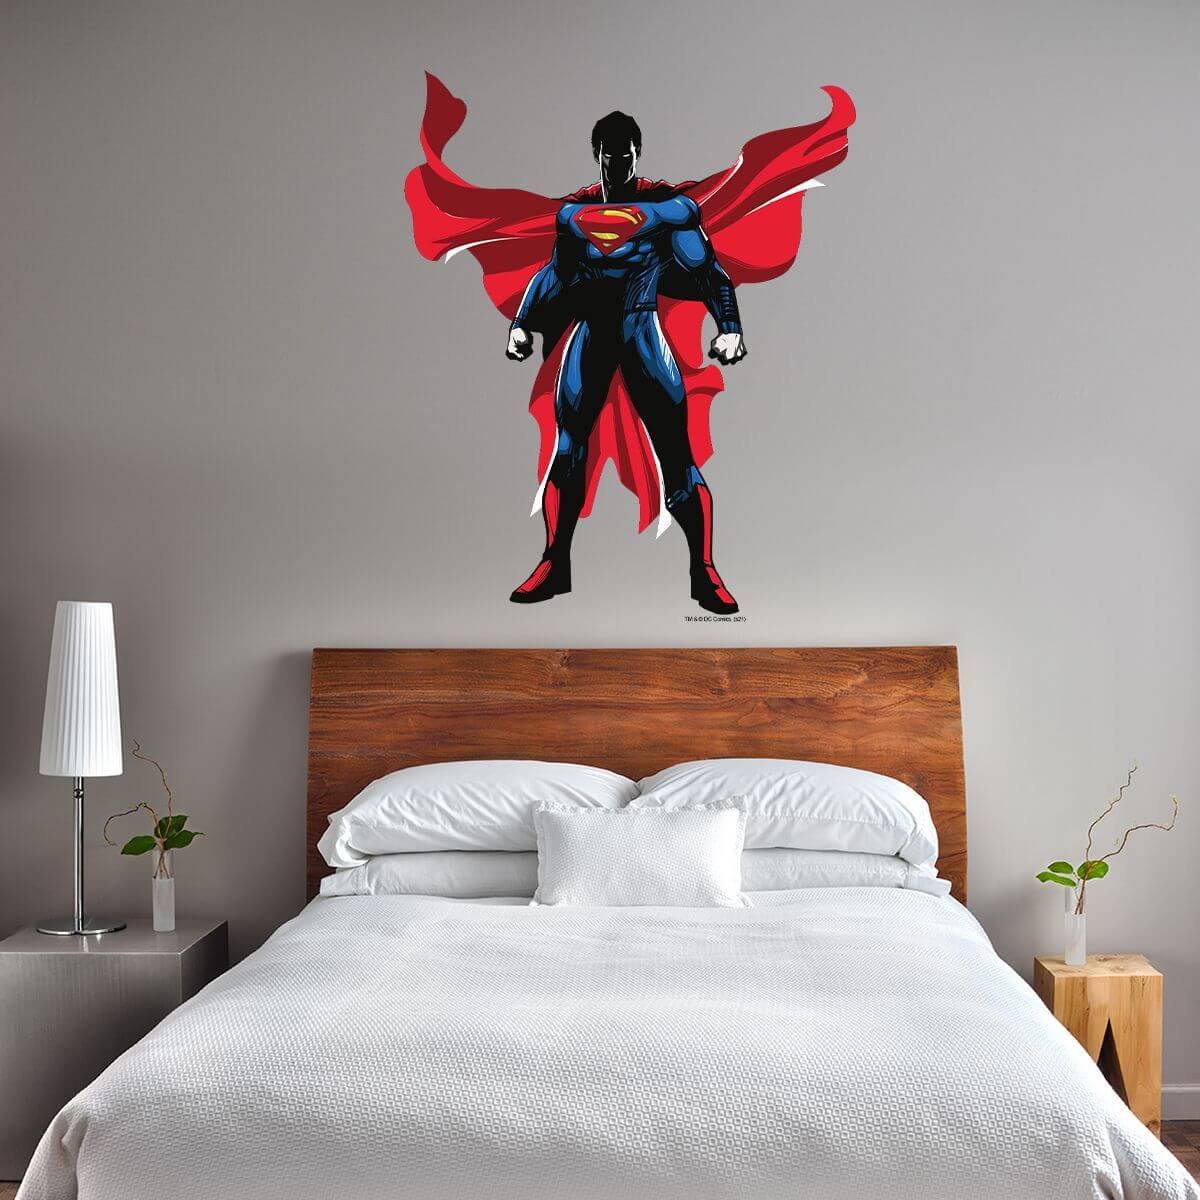 Kismet Decals Superman Battle Stance Licensed Wall Sticker - Easy DIY Justice League Home & Room Decor Wall Art - Kismet Decals